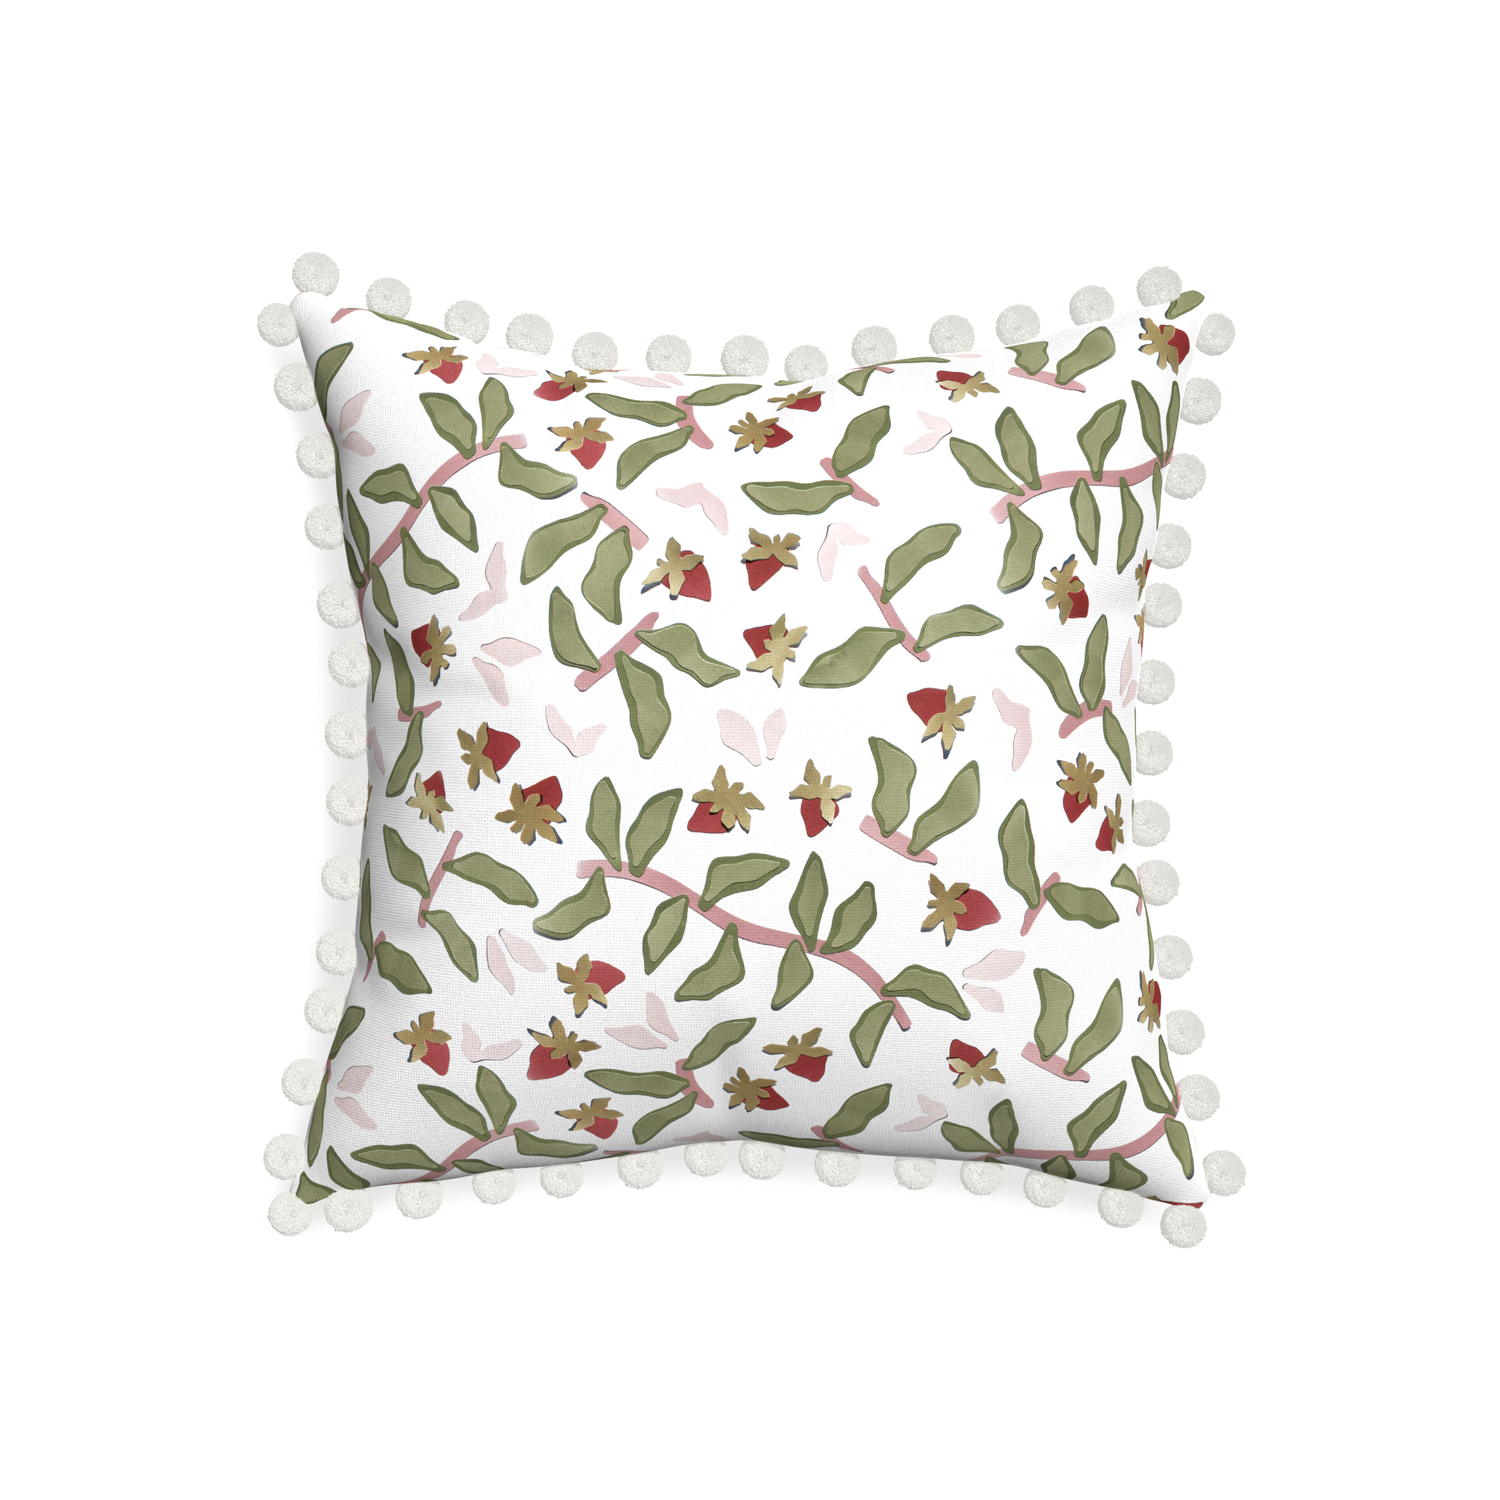 20-square nellie custom pillow with snow pom pom on white background